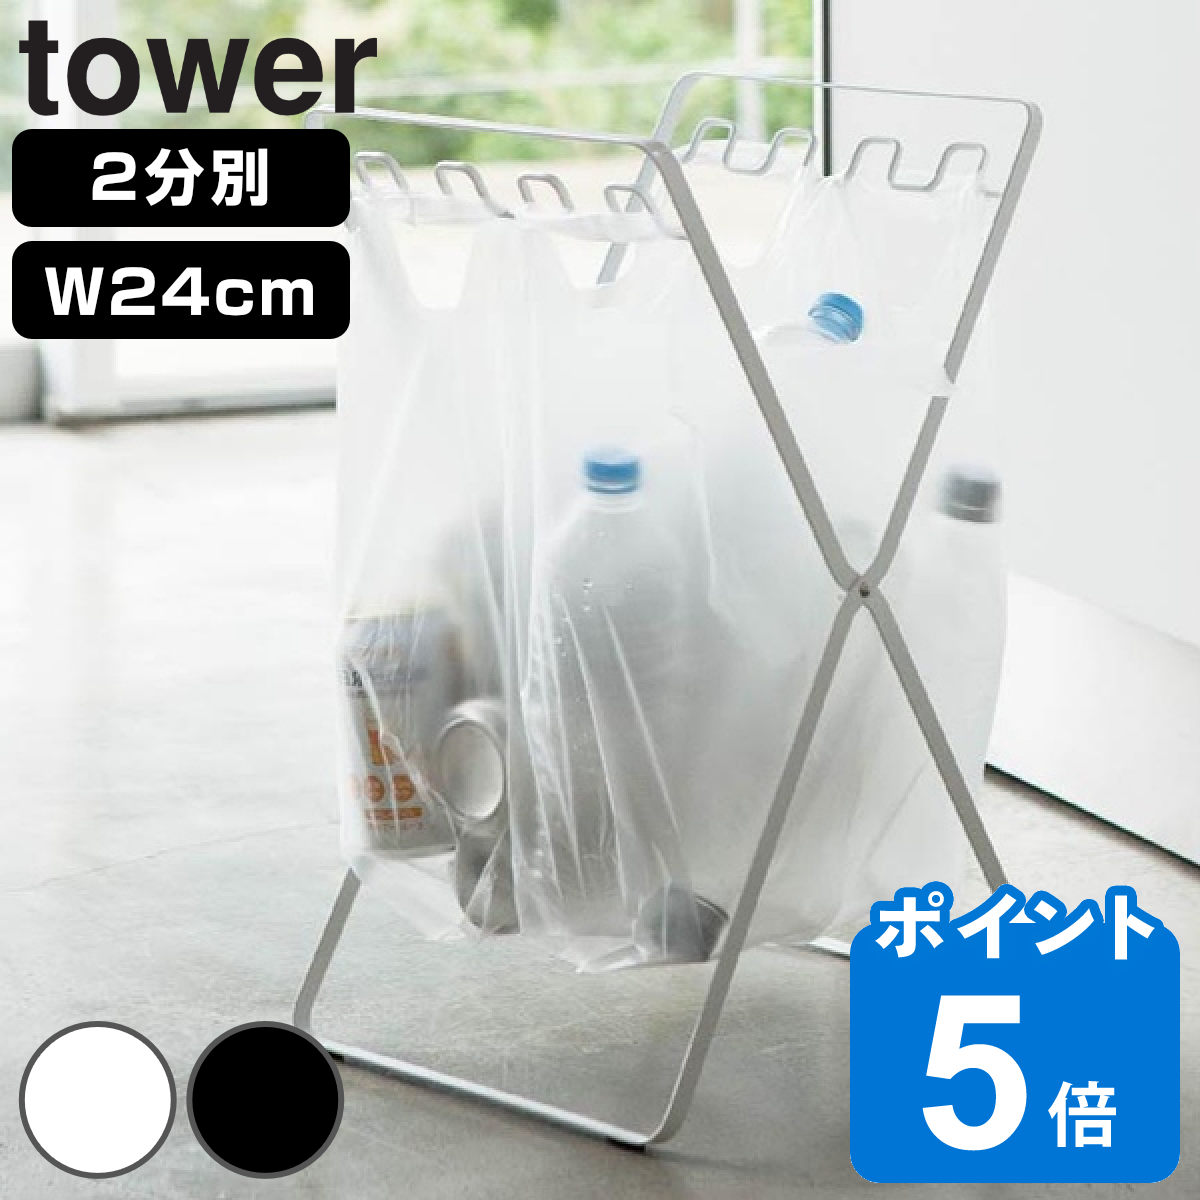 tower レジ袋スタンド 2分別 幅24cm